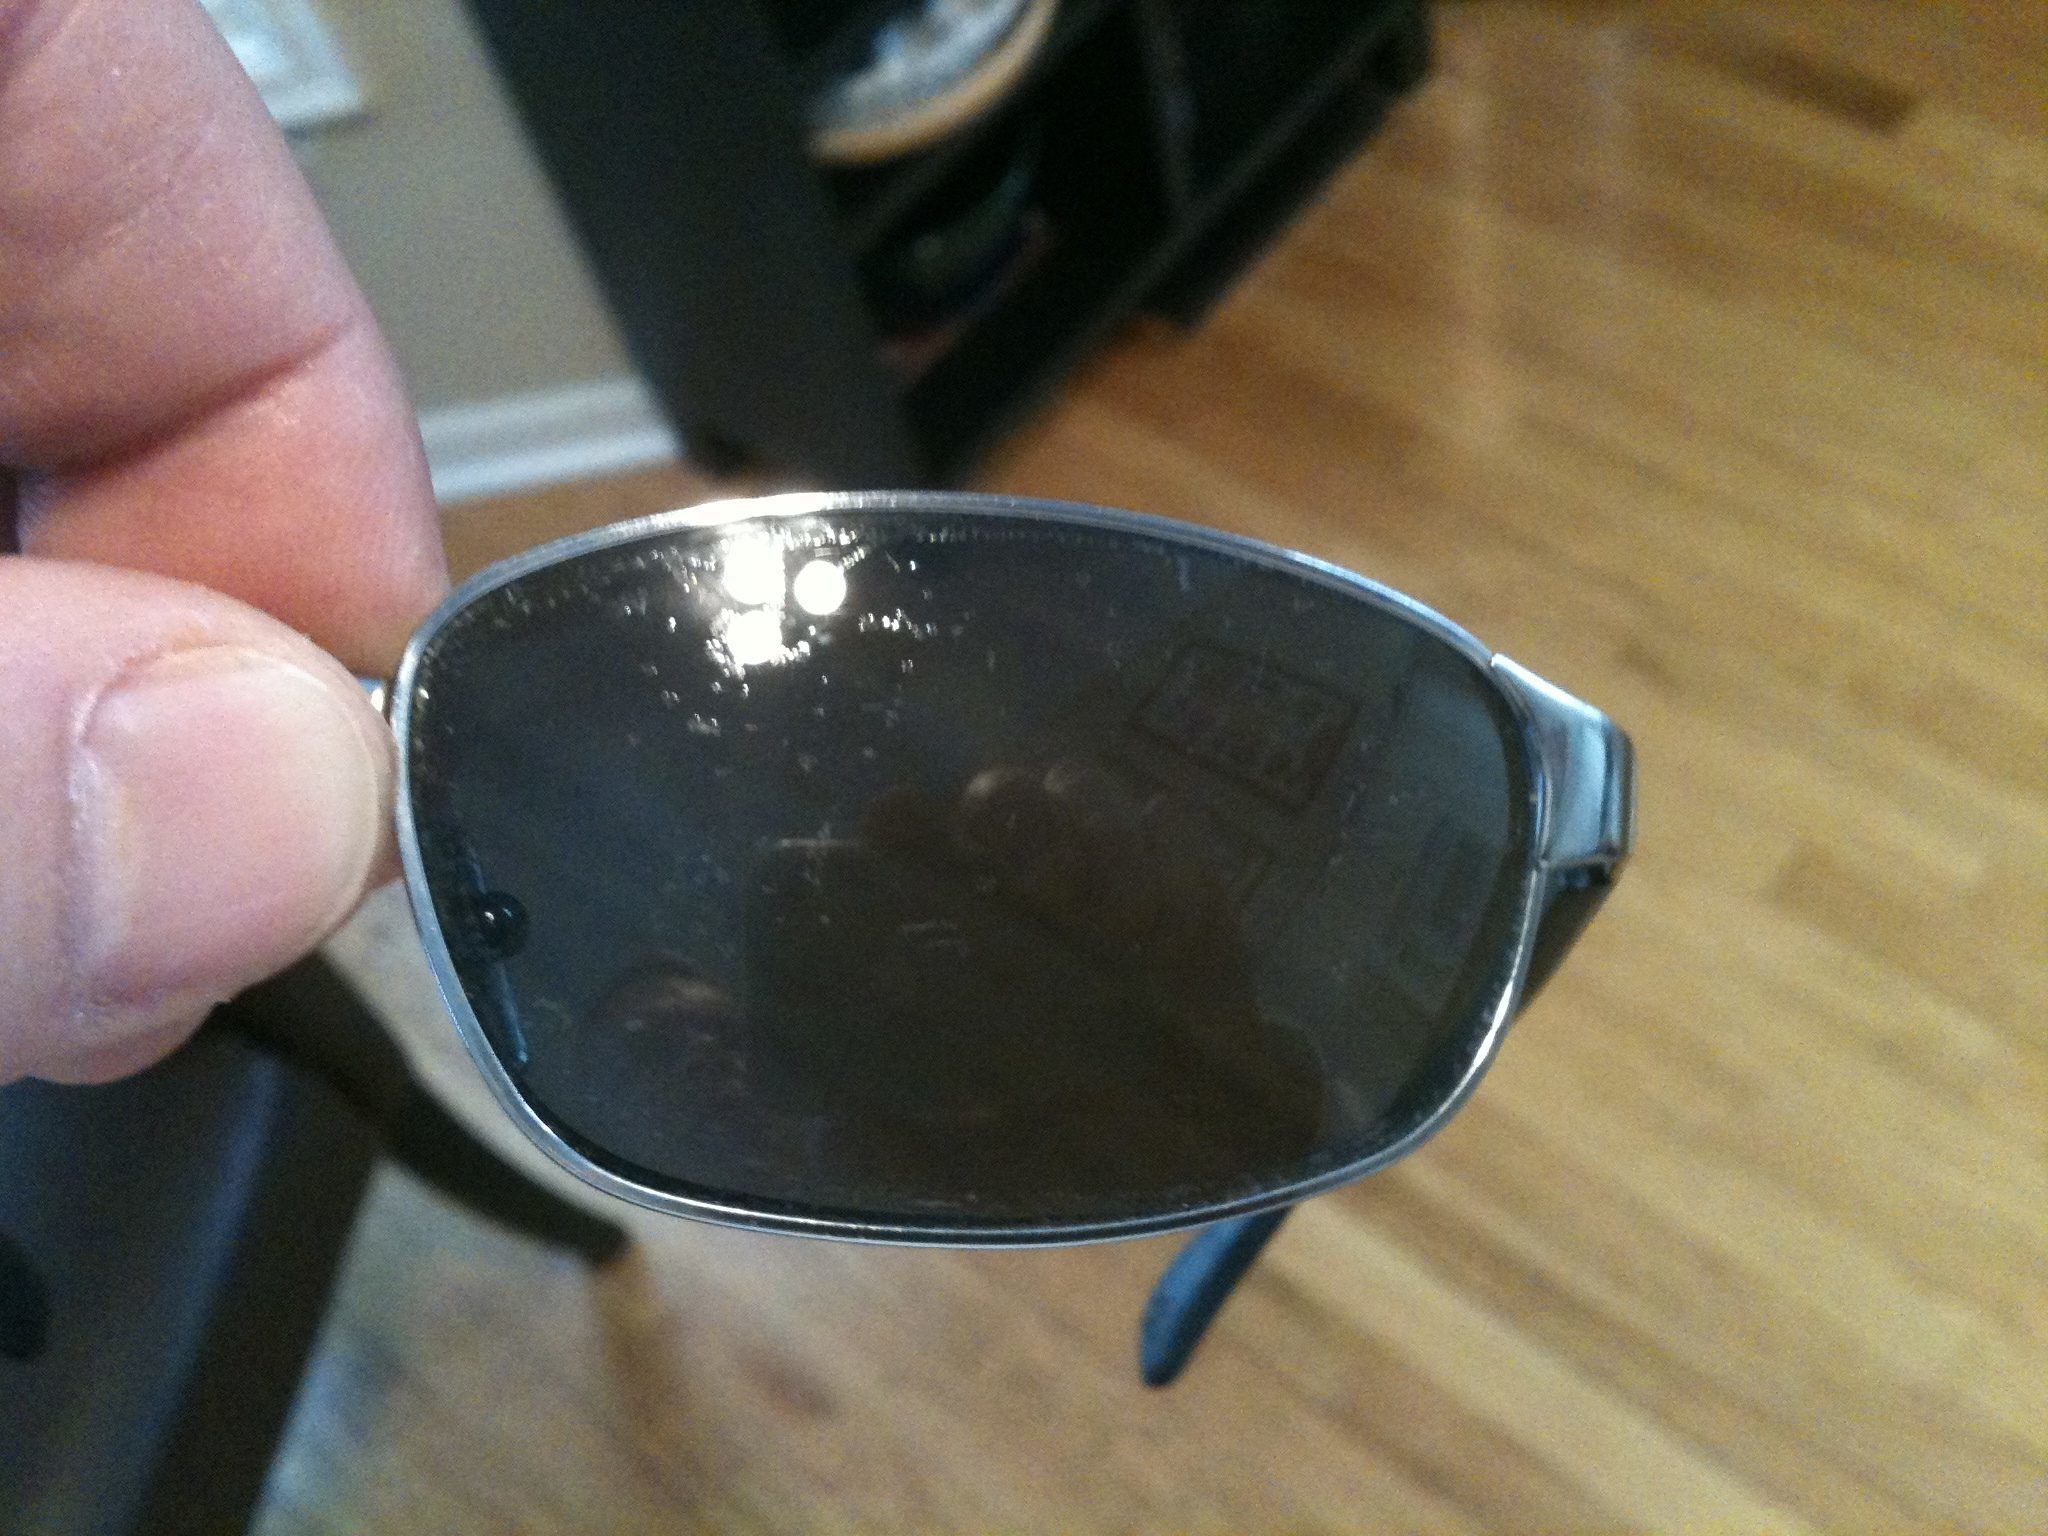 ray ban polarized lenses peeling